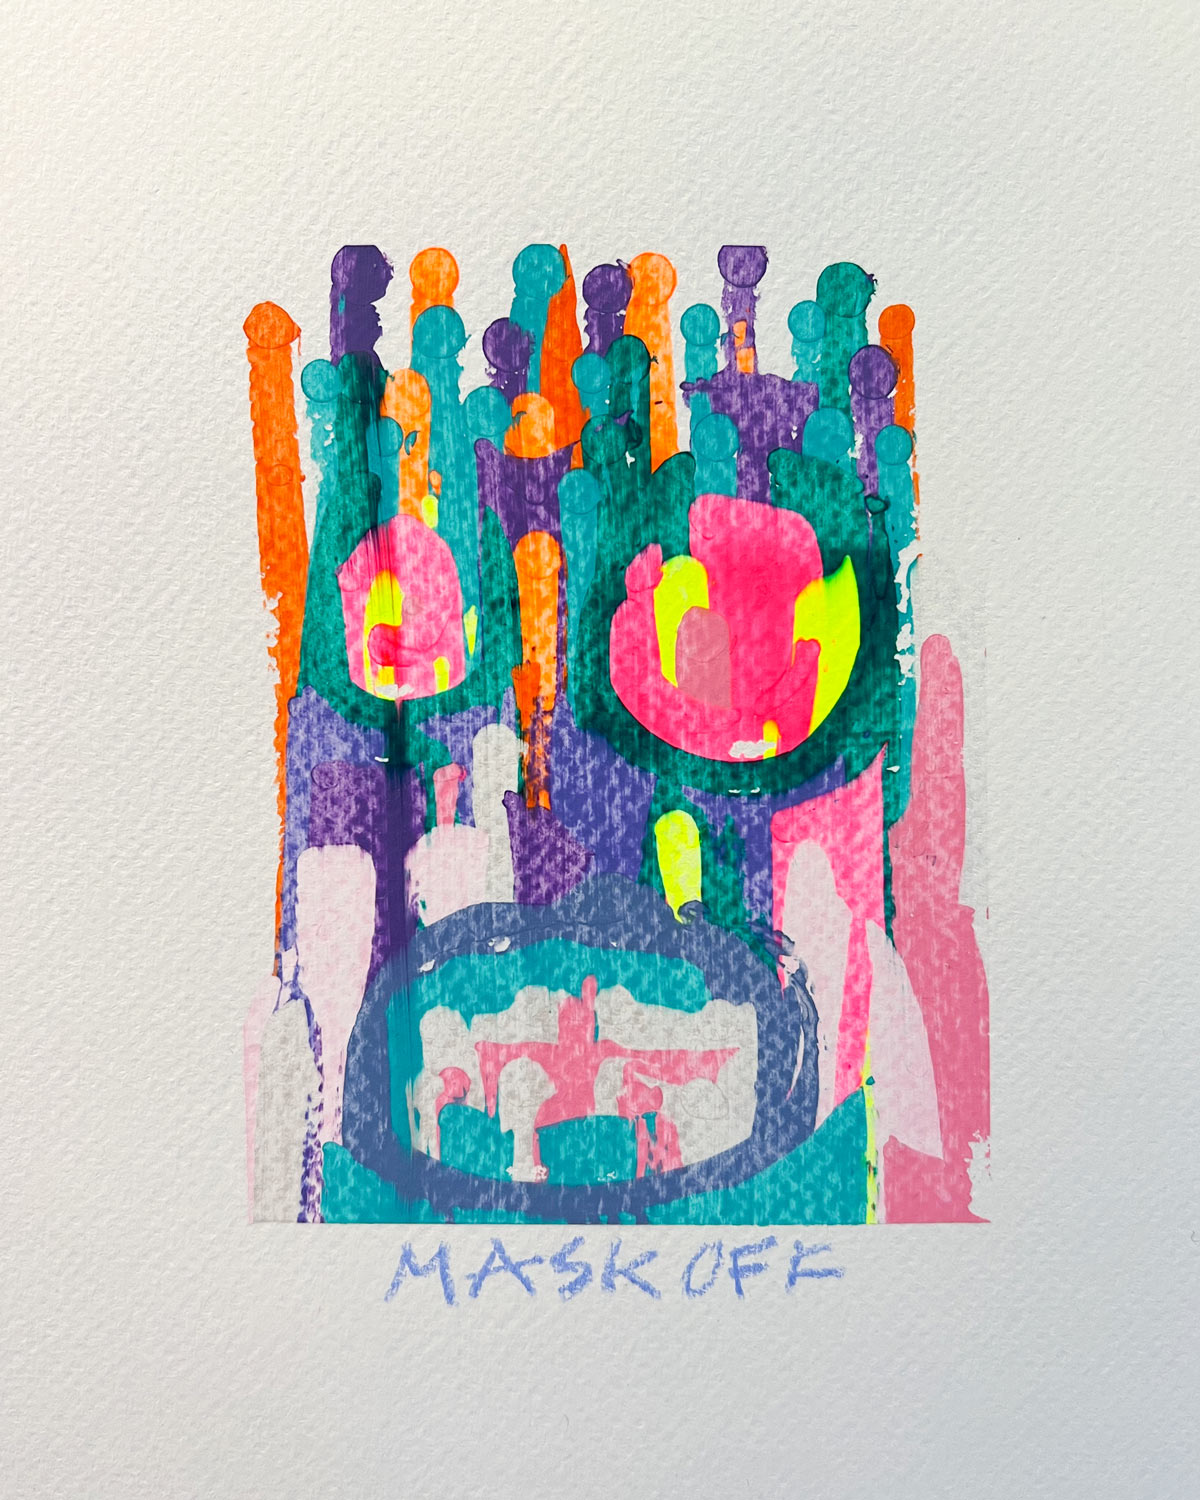 Mask Off by Mobbin_offiziel